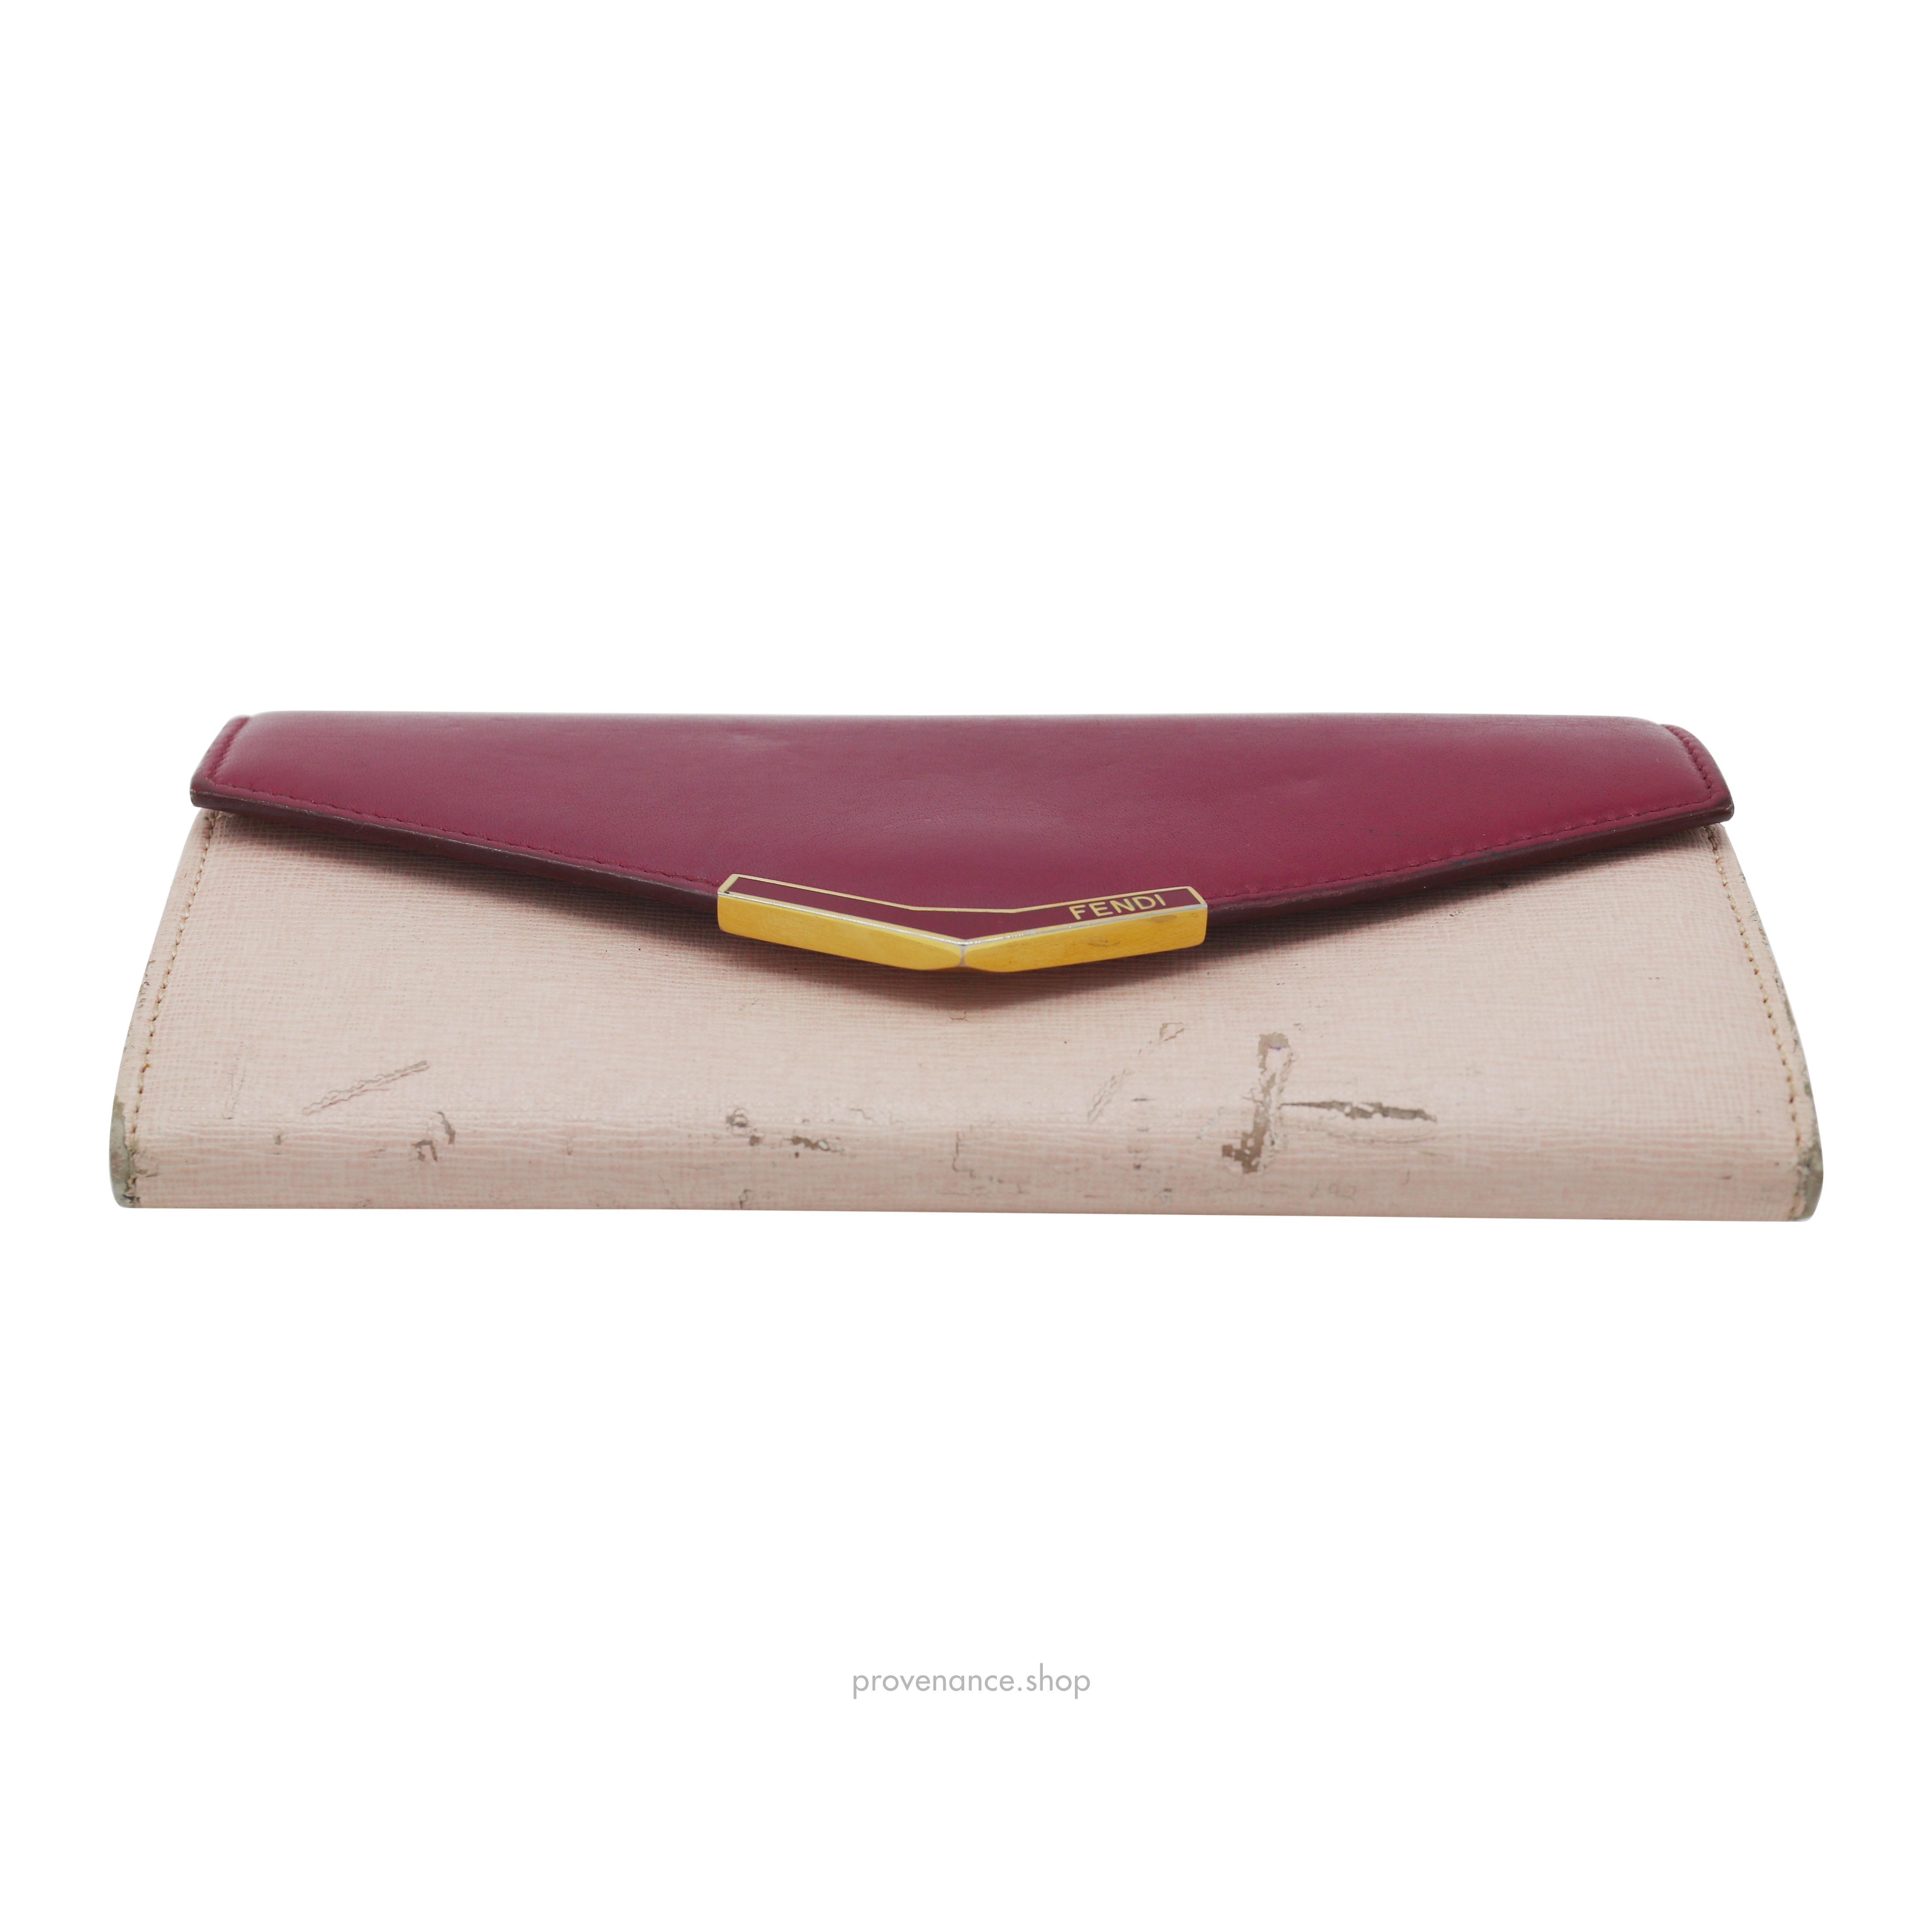 Fendi Long Wallet - Fuchsia Pink Leather - 4